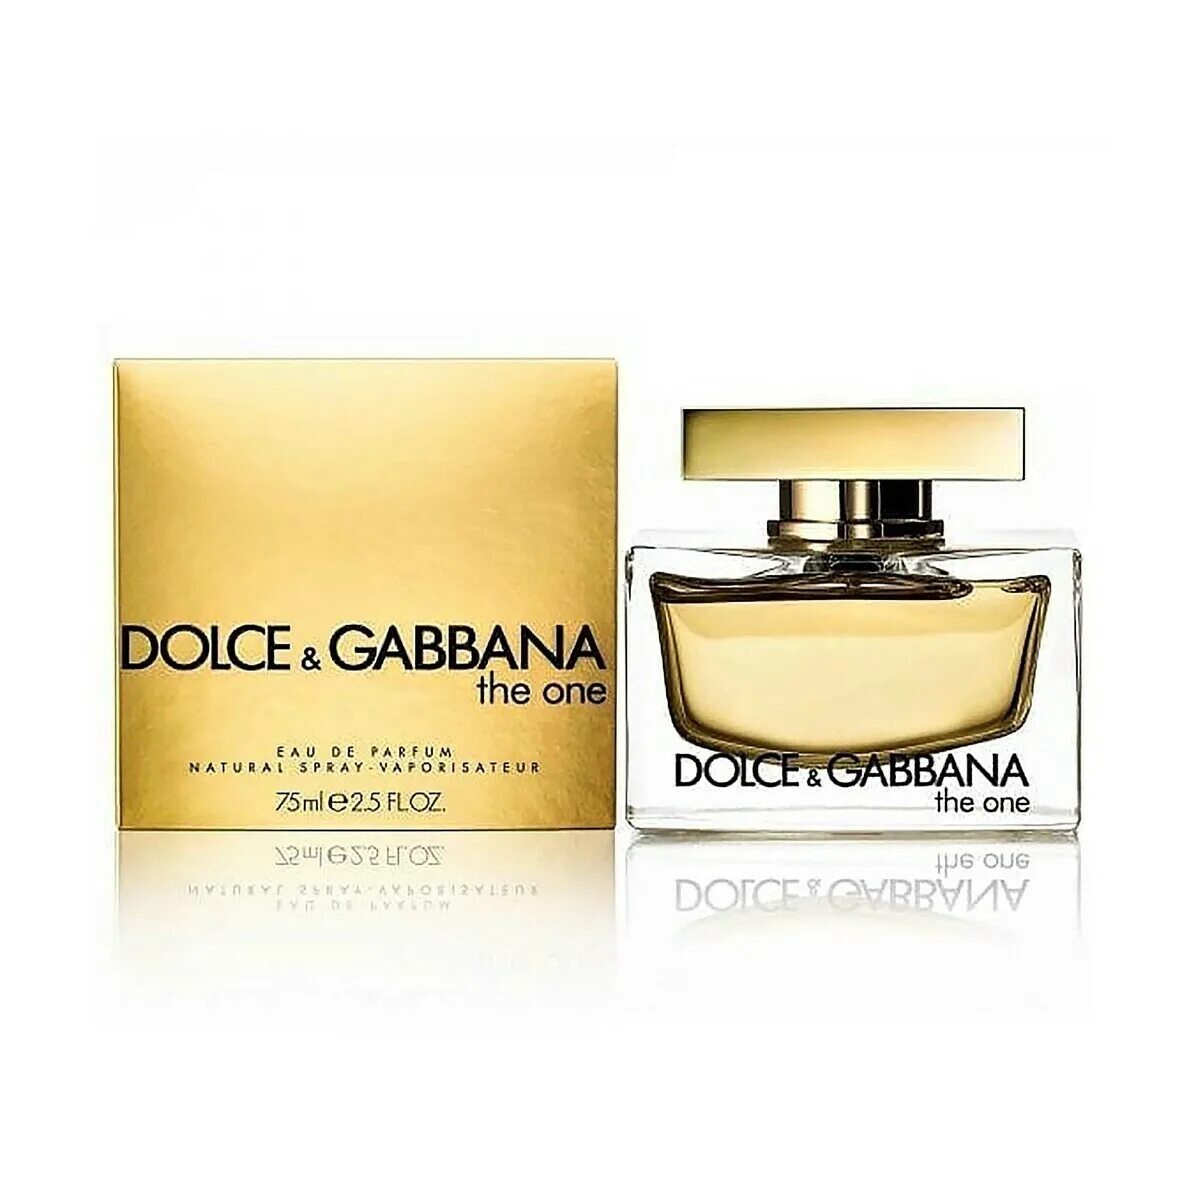 Dolce Gabbana the one 75 ml. Dolce & Gabbana the one women EDP, 75 ml. Dolce & Gabbana the one 75 мл. Dolce Gabbana the one 75ml мужские. Дольче габбана ван отзывы